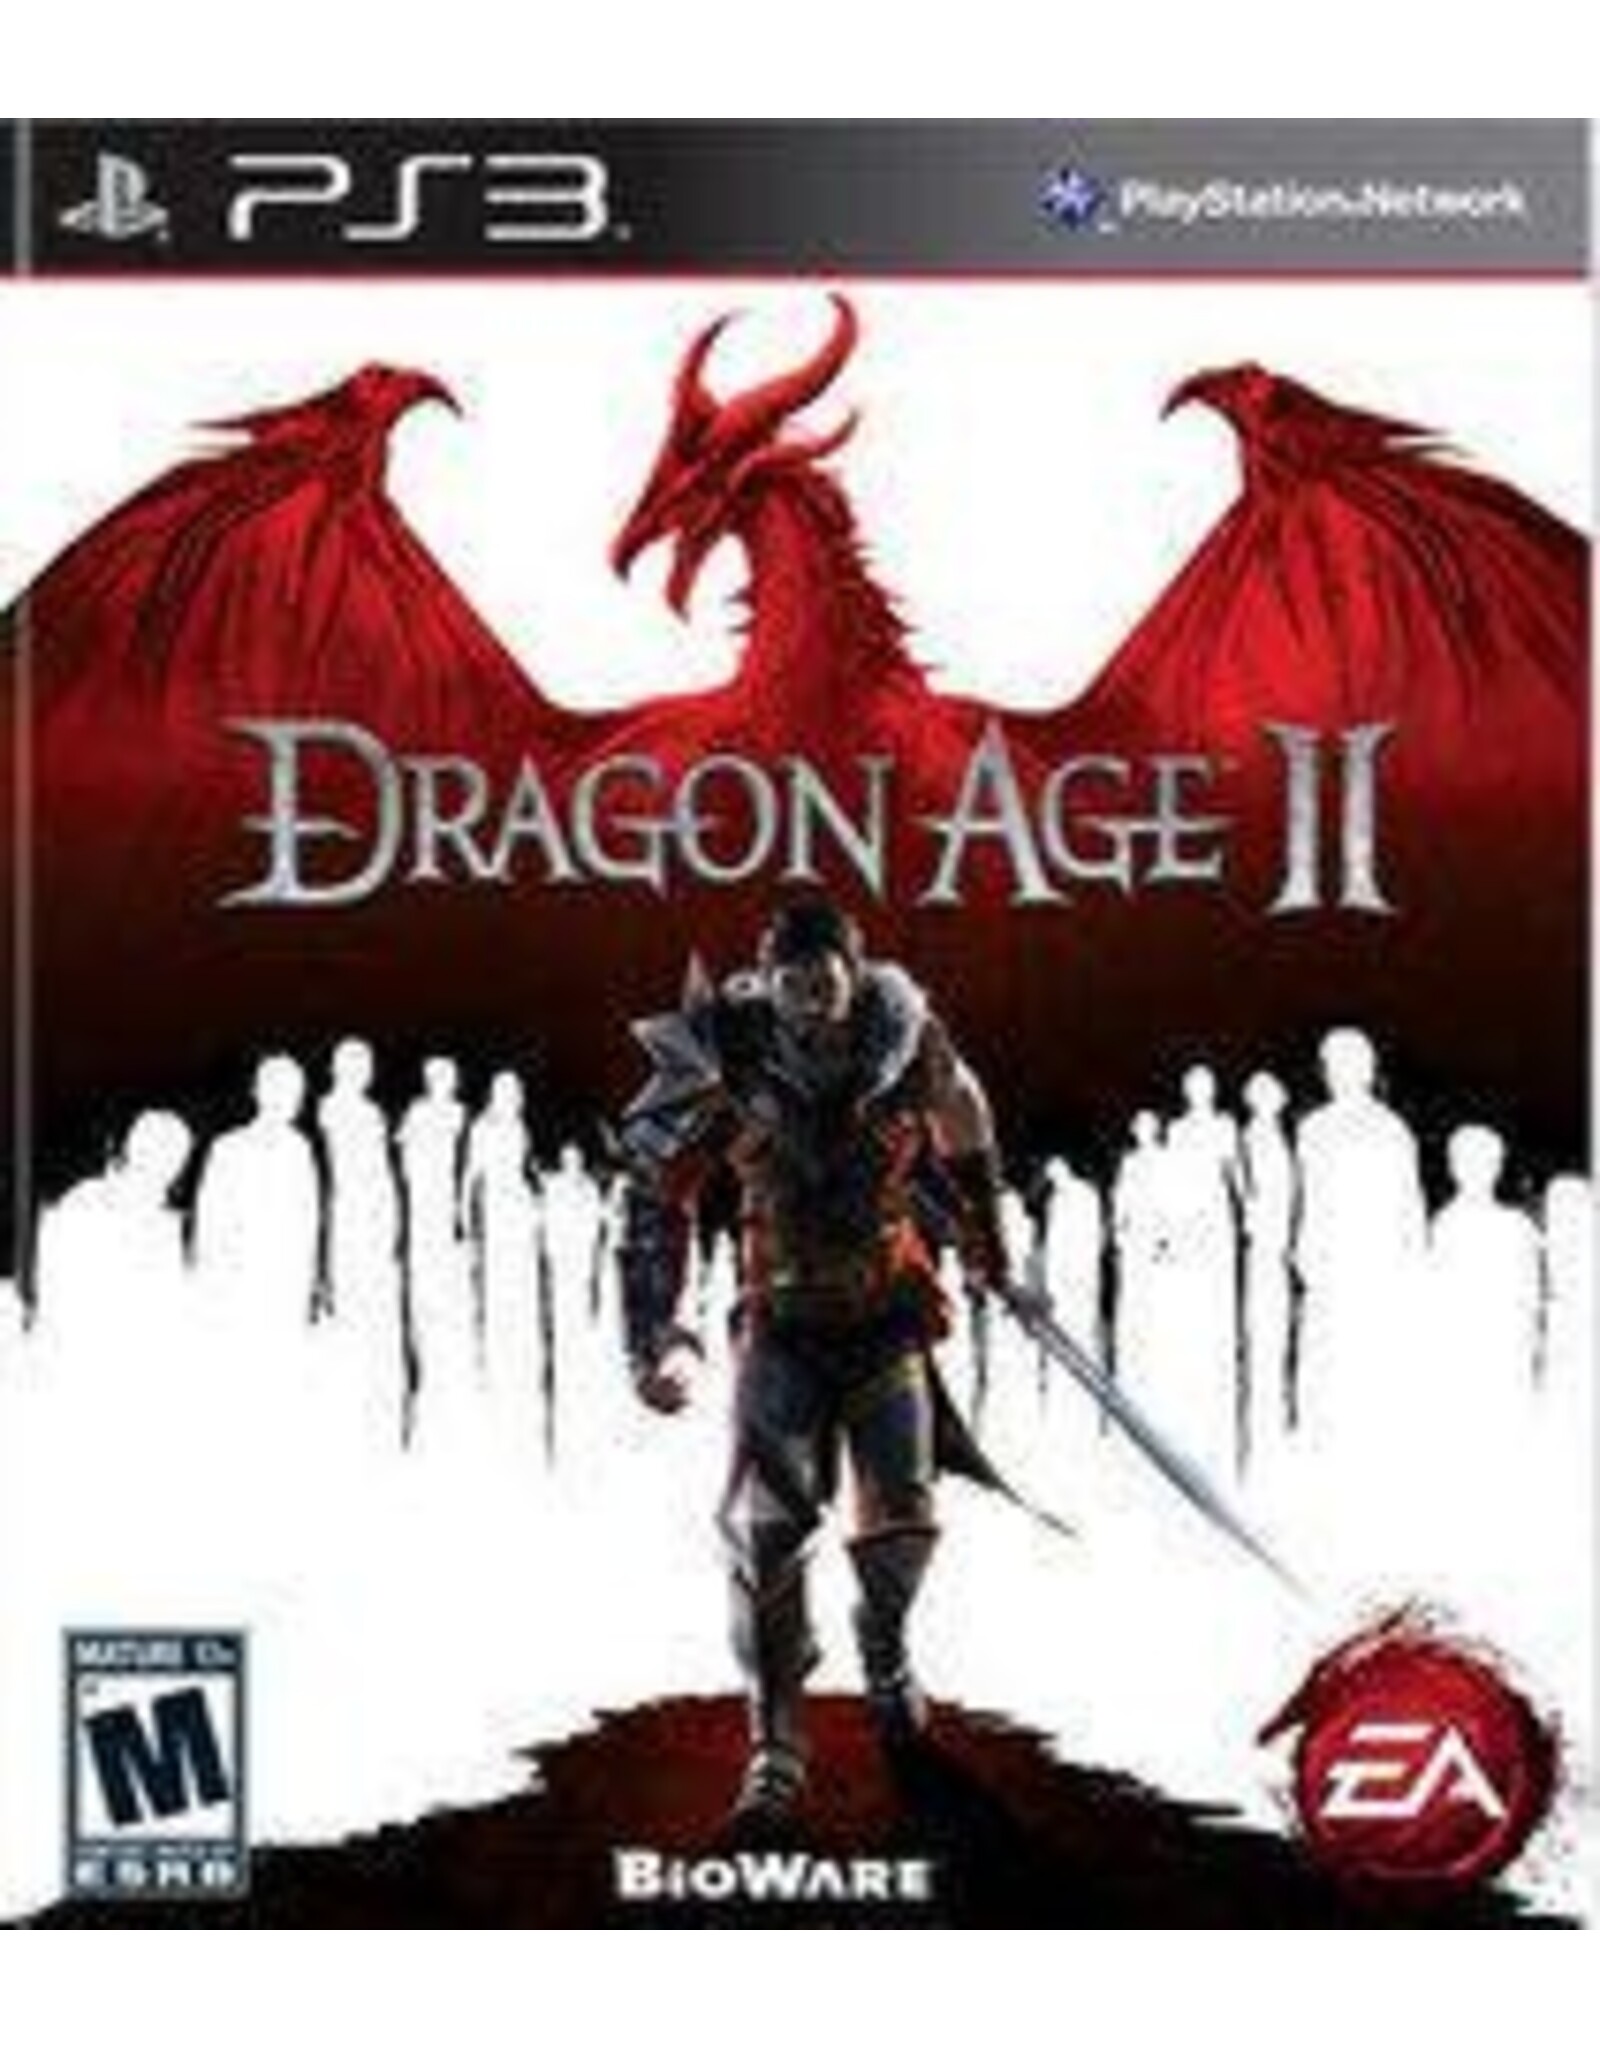 Playstation 3 Dragon Age II (Used, No Manual)